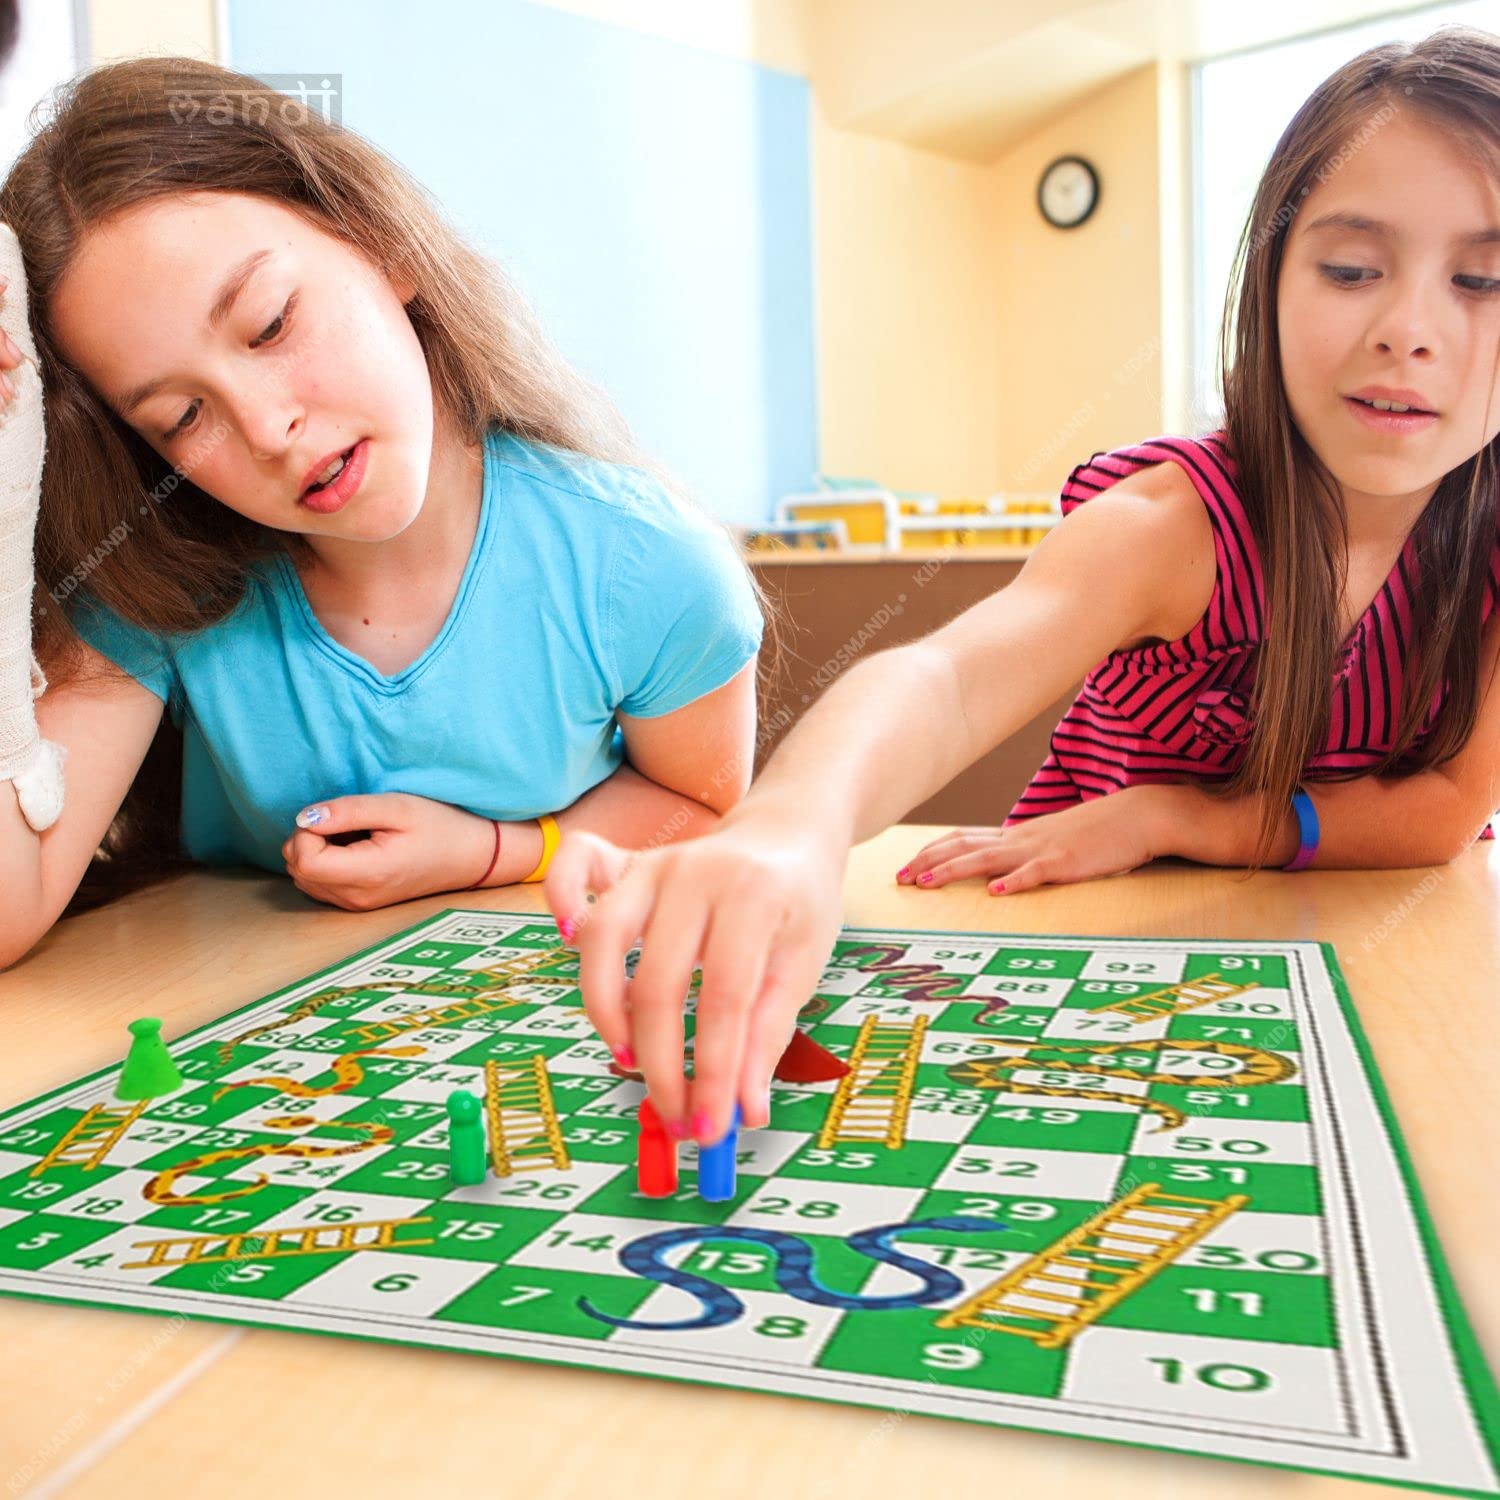 Kids Mandi seven-in-one family board game set.